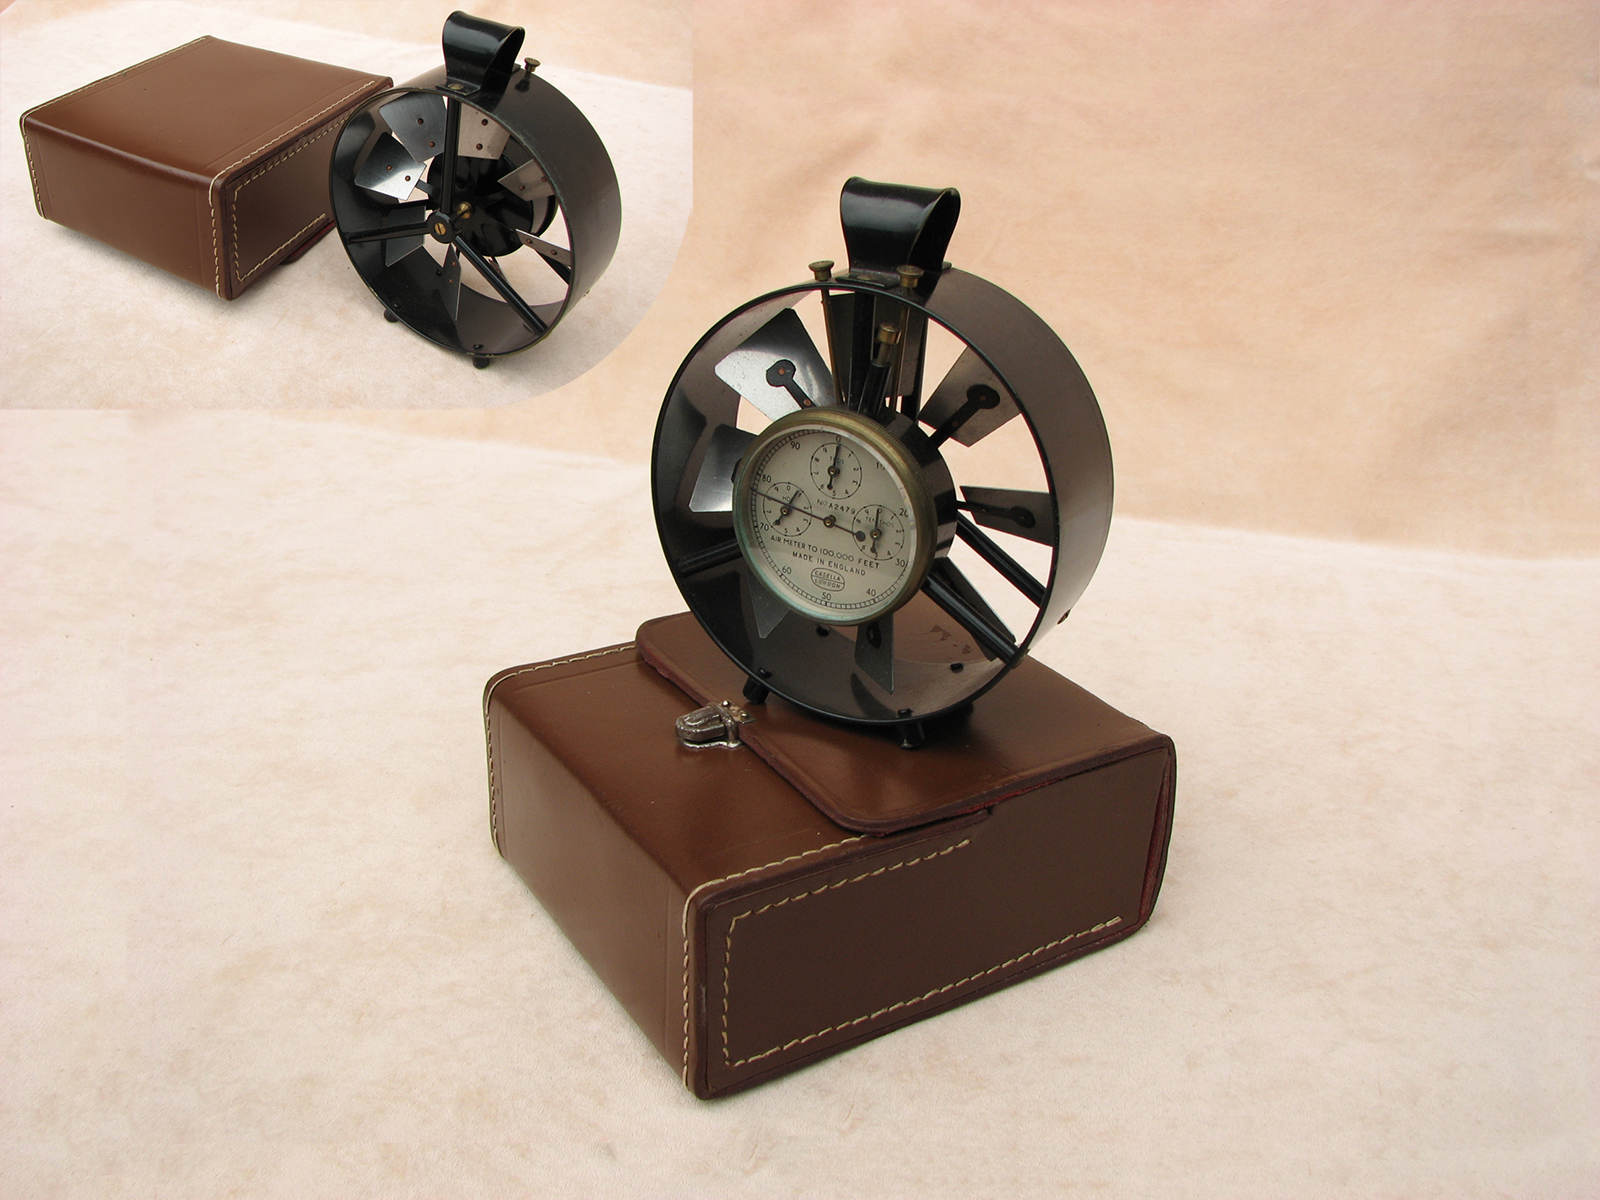 Biram type medium speed mining air meter by Casella London